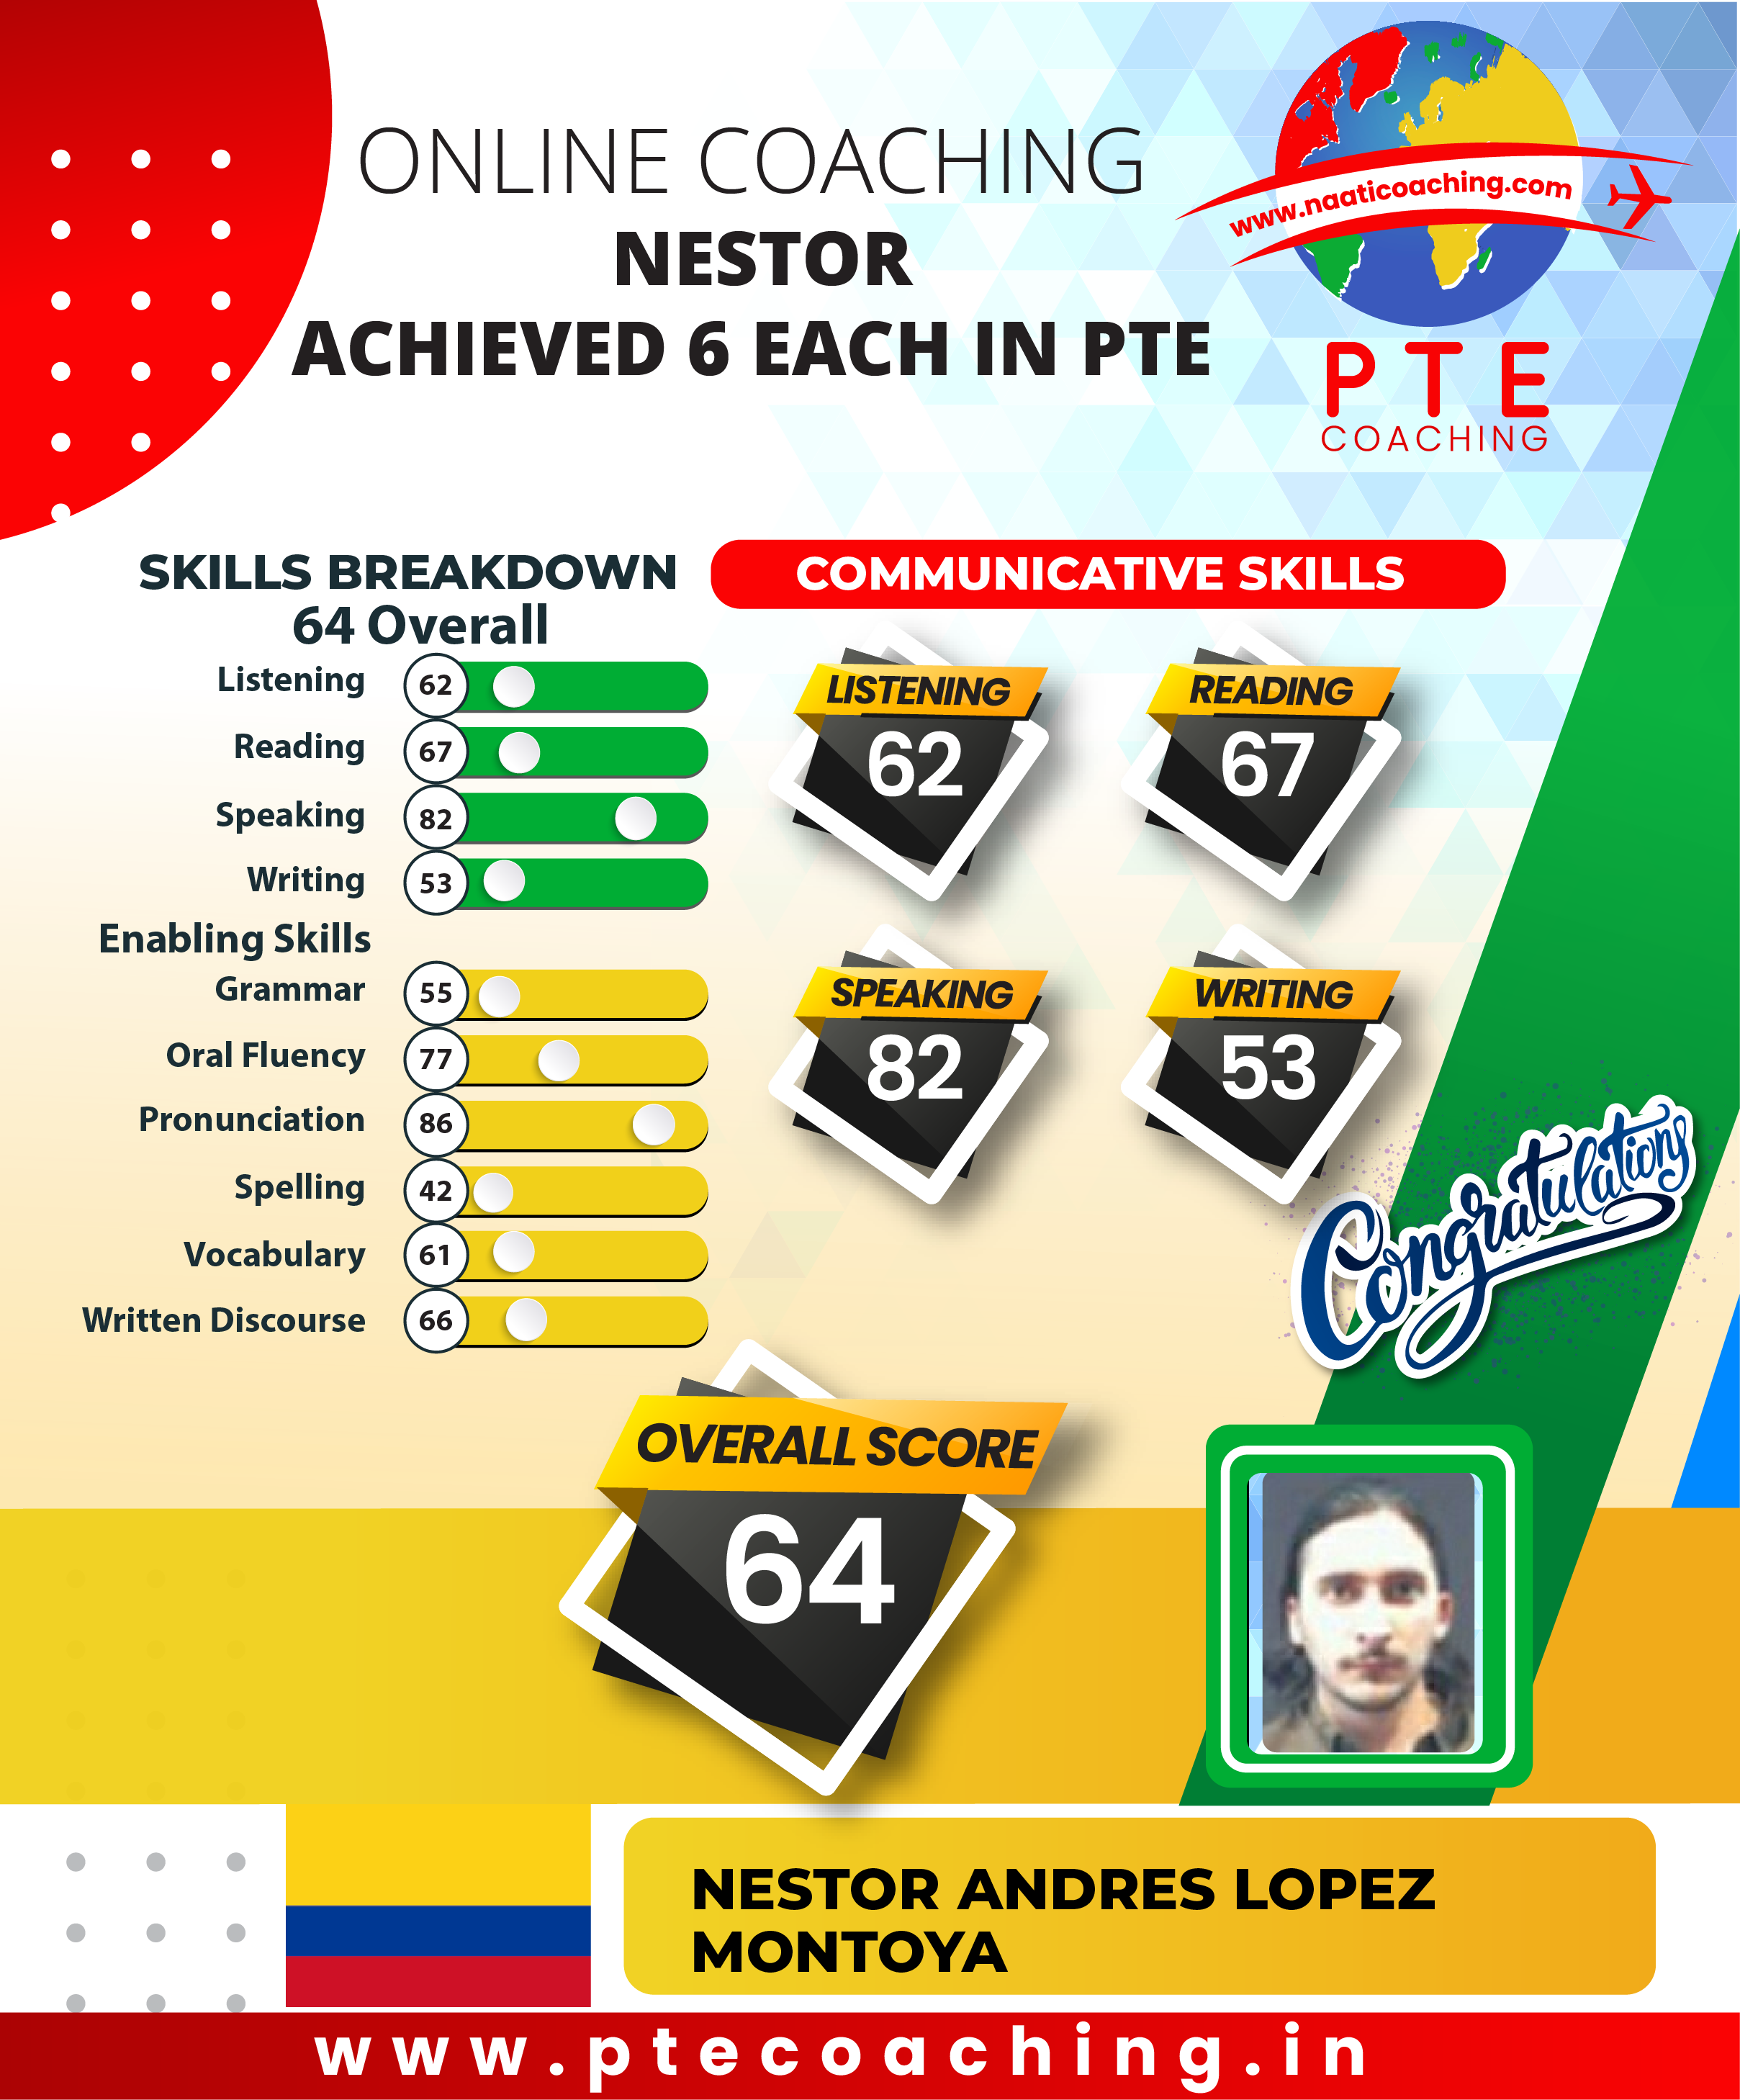 PTE Coaching Scorecard - Nestor achieved 6 each in PTE